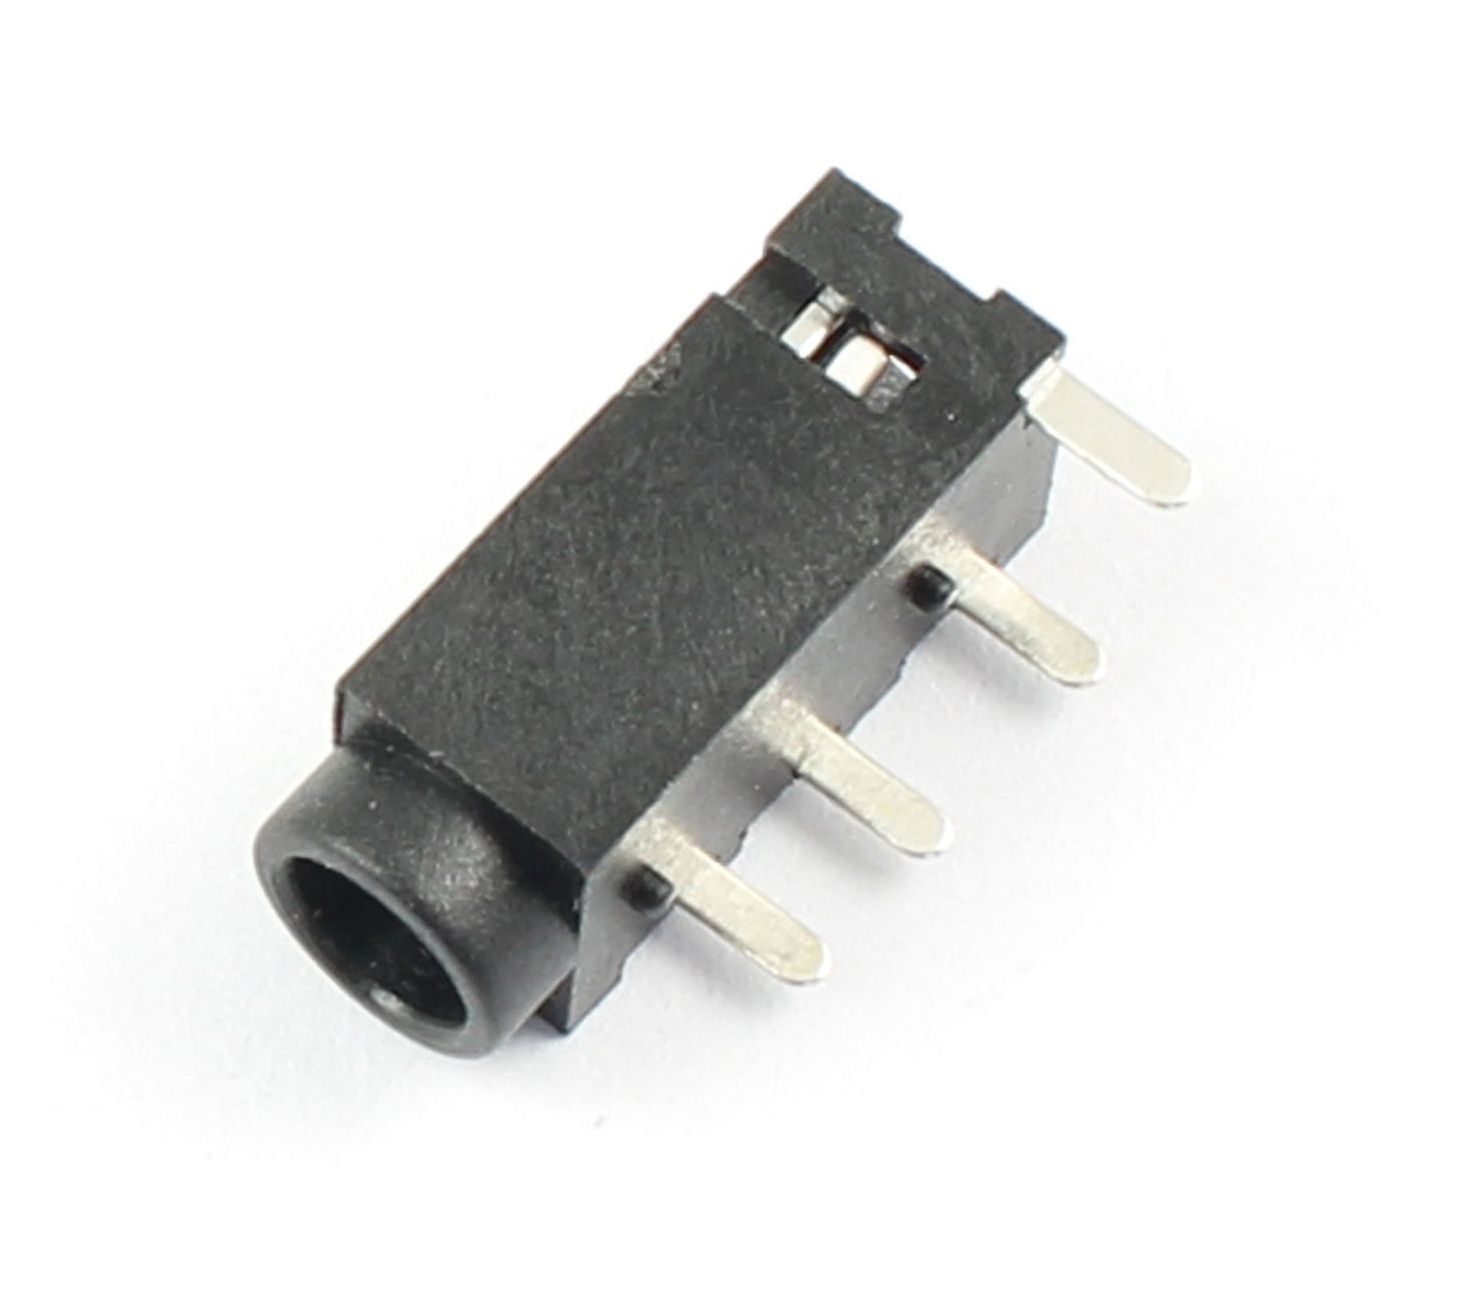 Jack connector 3.5mm 4-polig TRRS female PCB PJ-320A